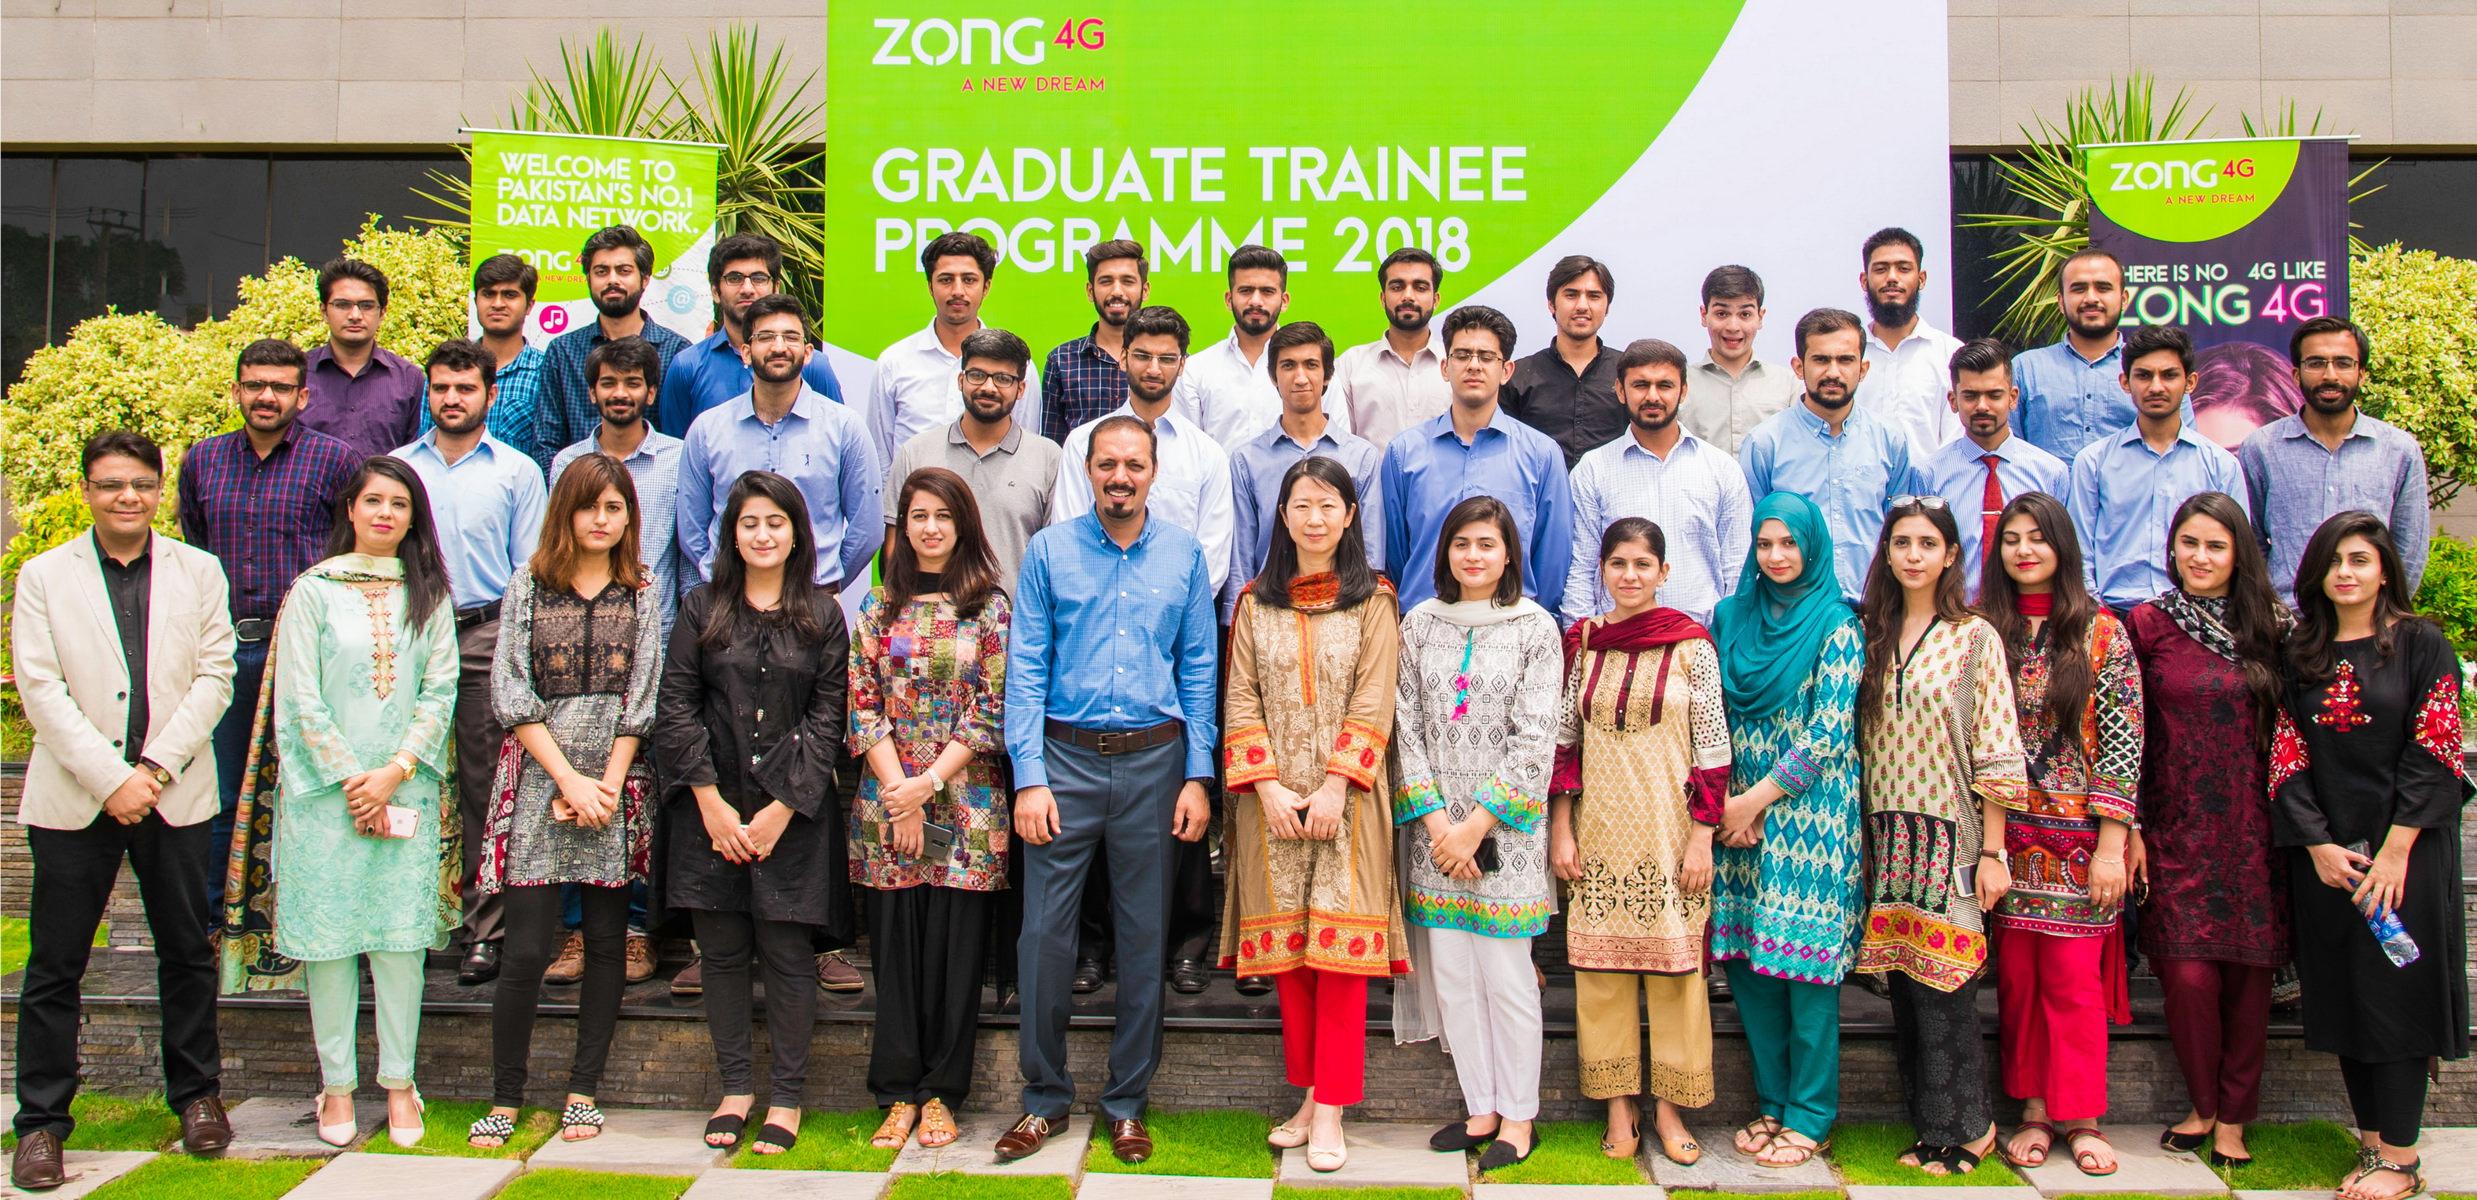 Leaders of tomorrow -Zong 4G’s Graduate Trainee Program